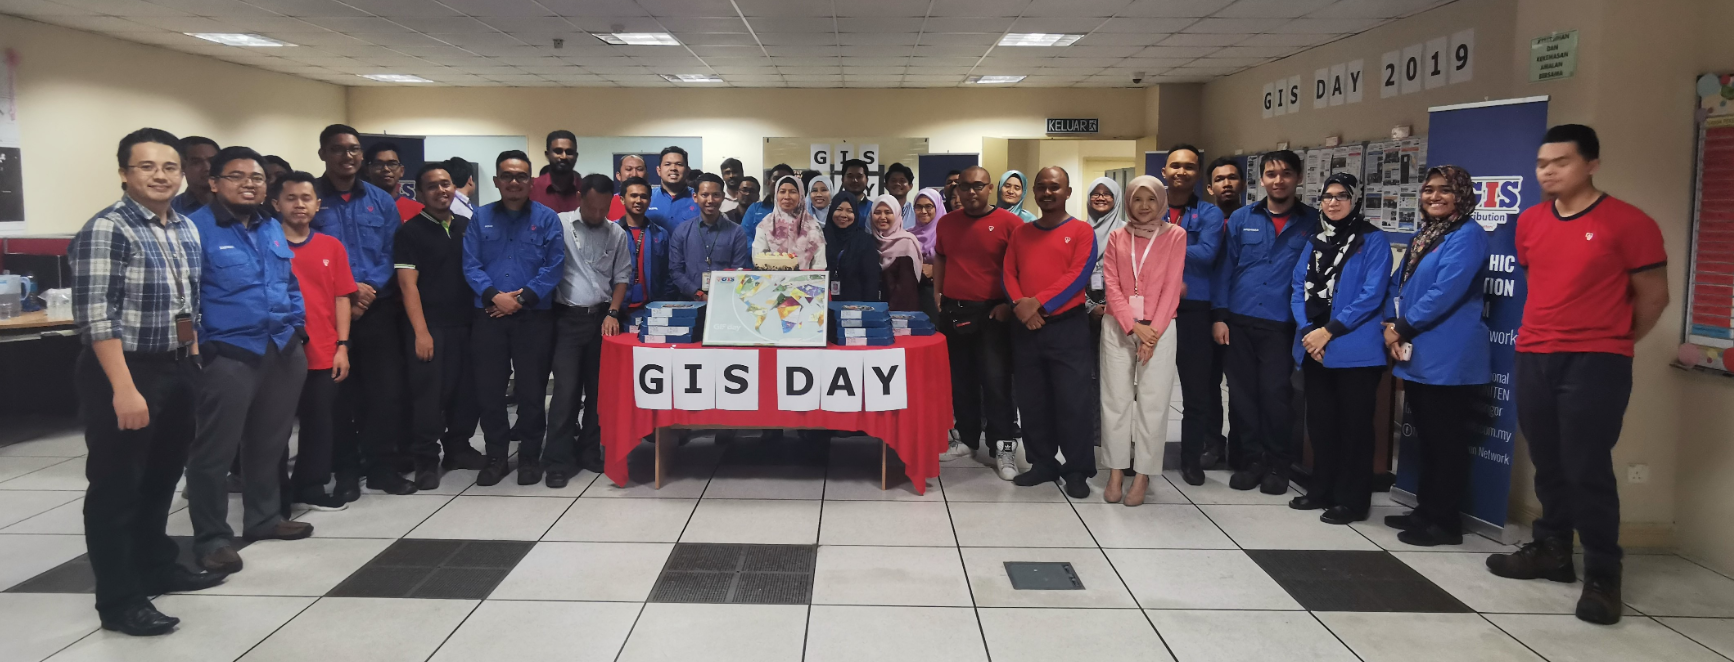 GIS Day celebration in Malaysia.